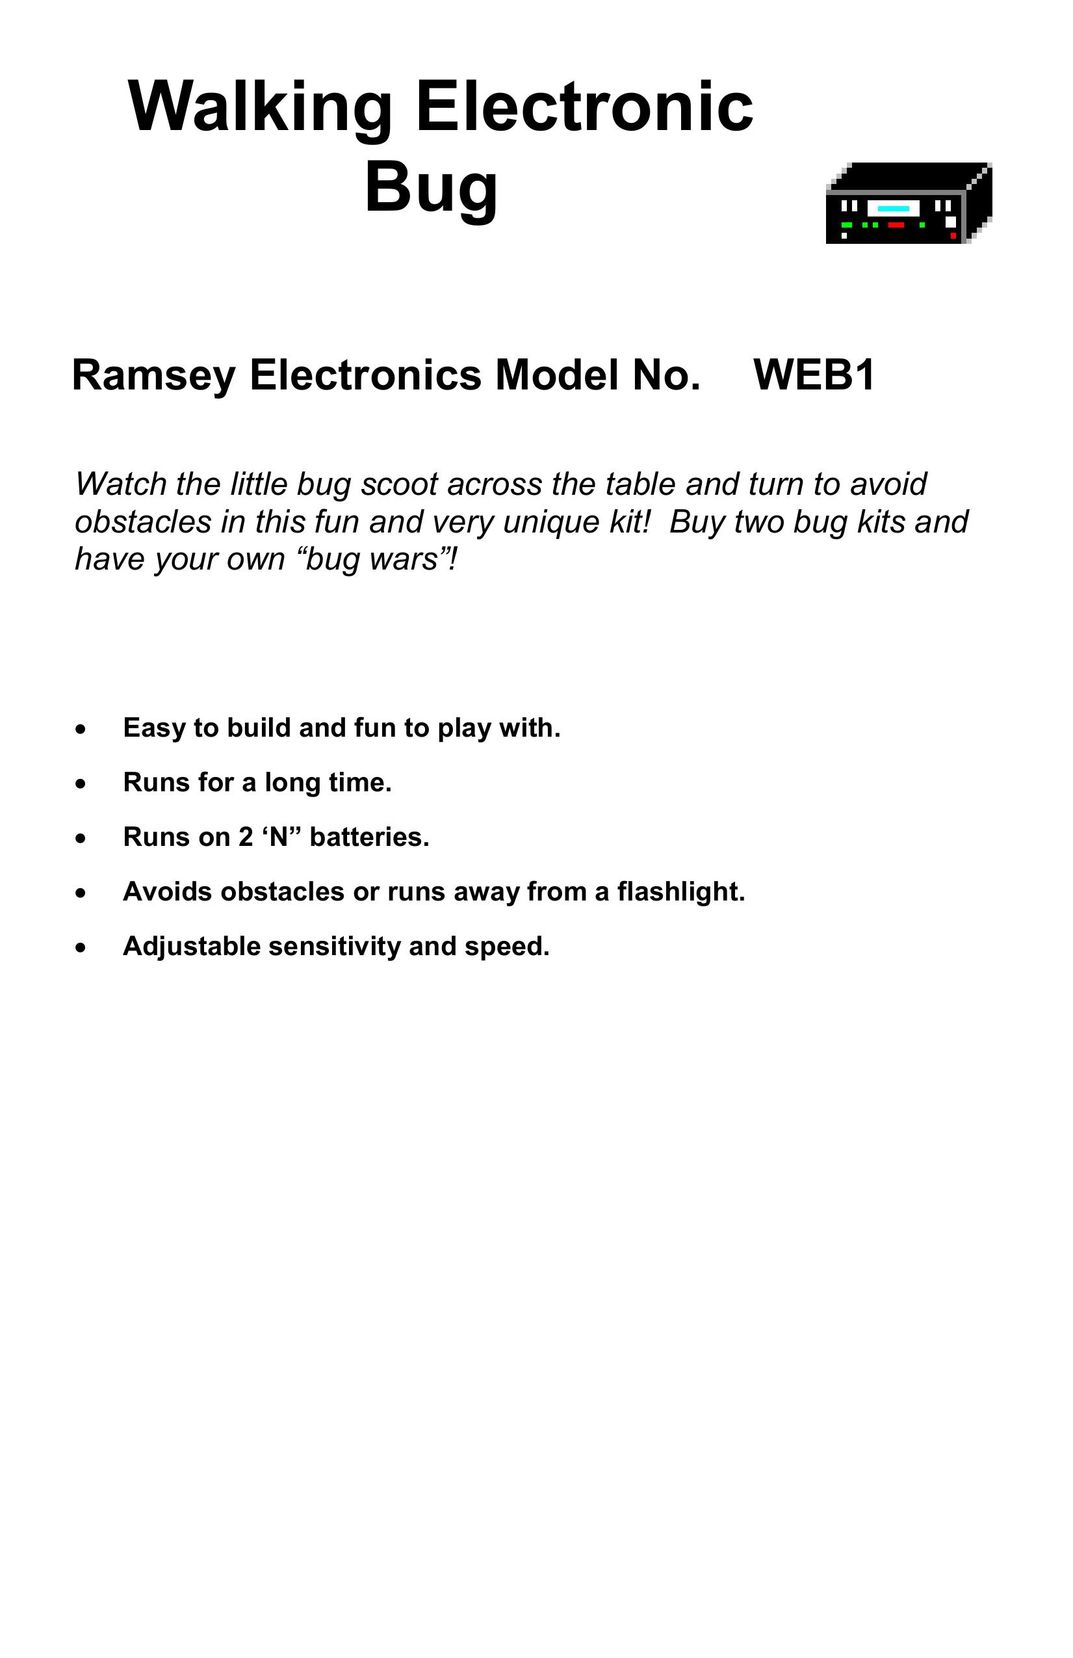 Ramsey Electronics WEB1 Robotics User Manual